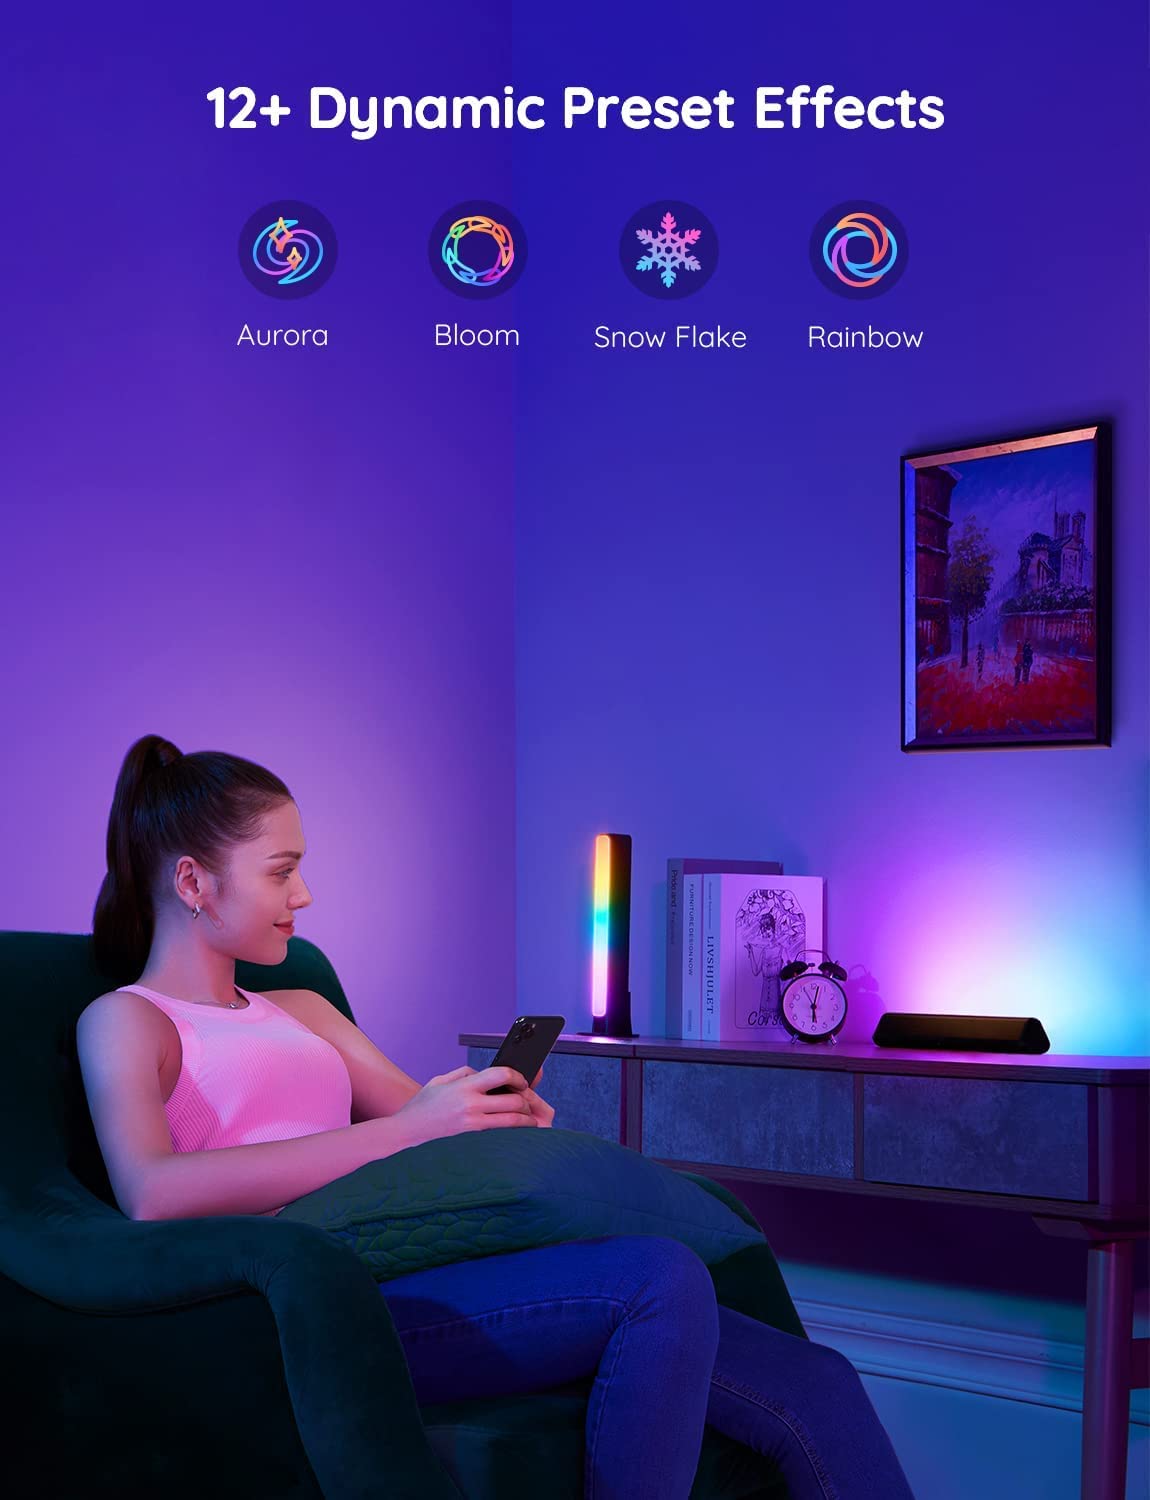  Govee Smart LED Light Bars, Work with Alexa and Google